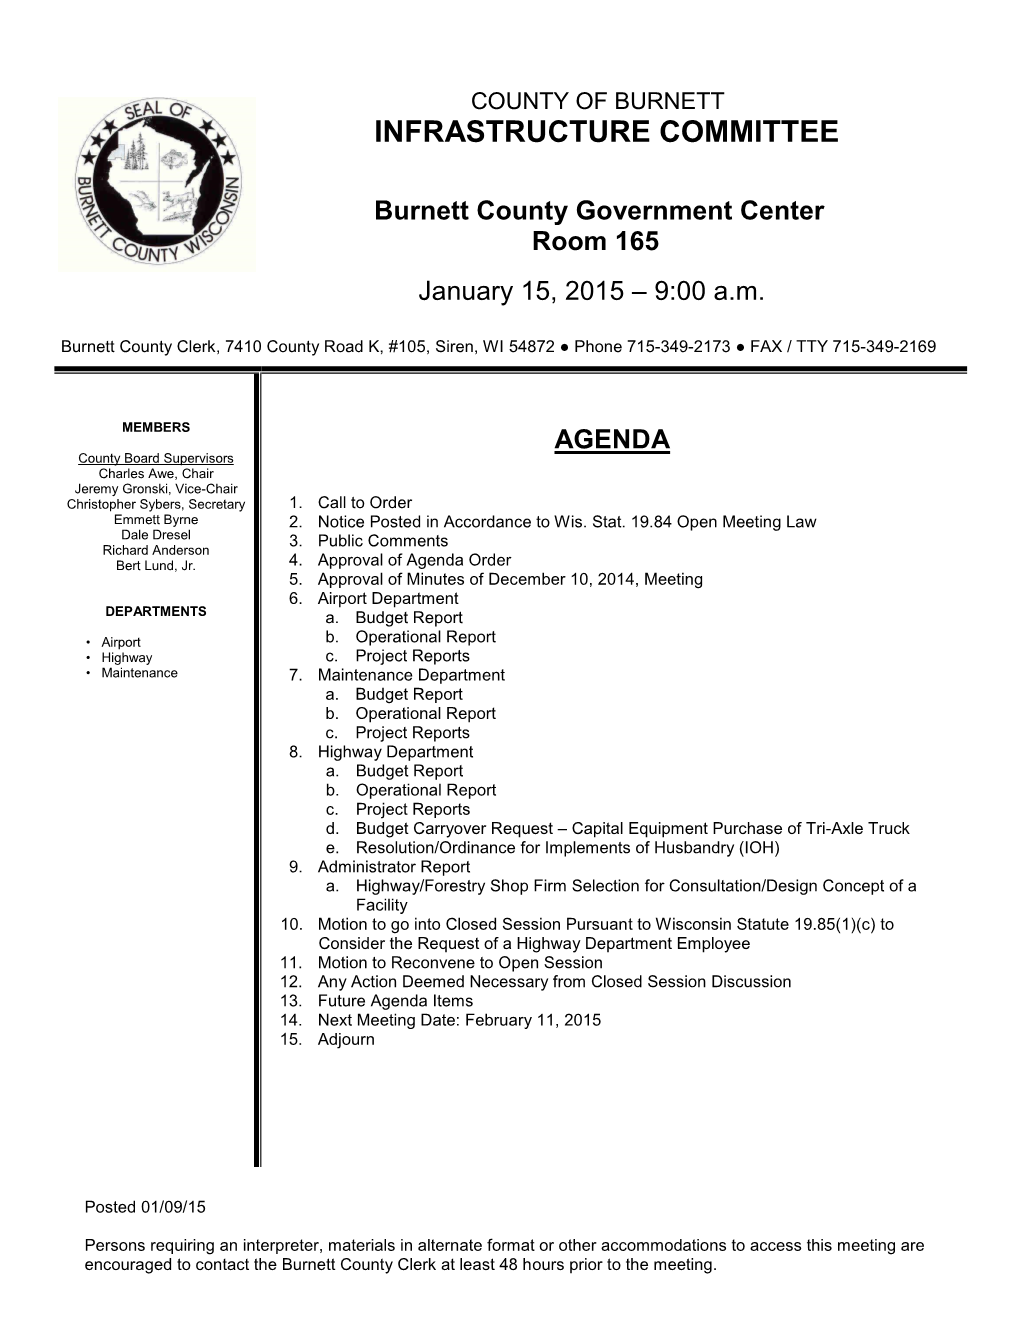 Burnett County Clerk, 7410 County Road K, #105, Siren, WI 54872 ● Phone 715-349-2173 ● FAX / TTY 715-349-2169